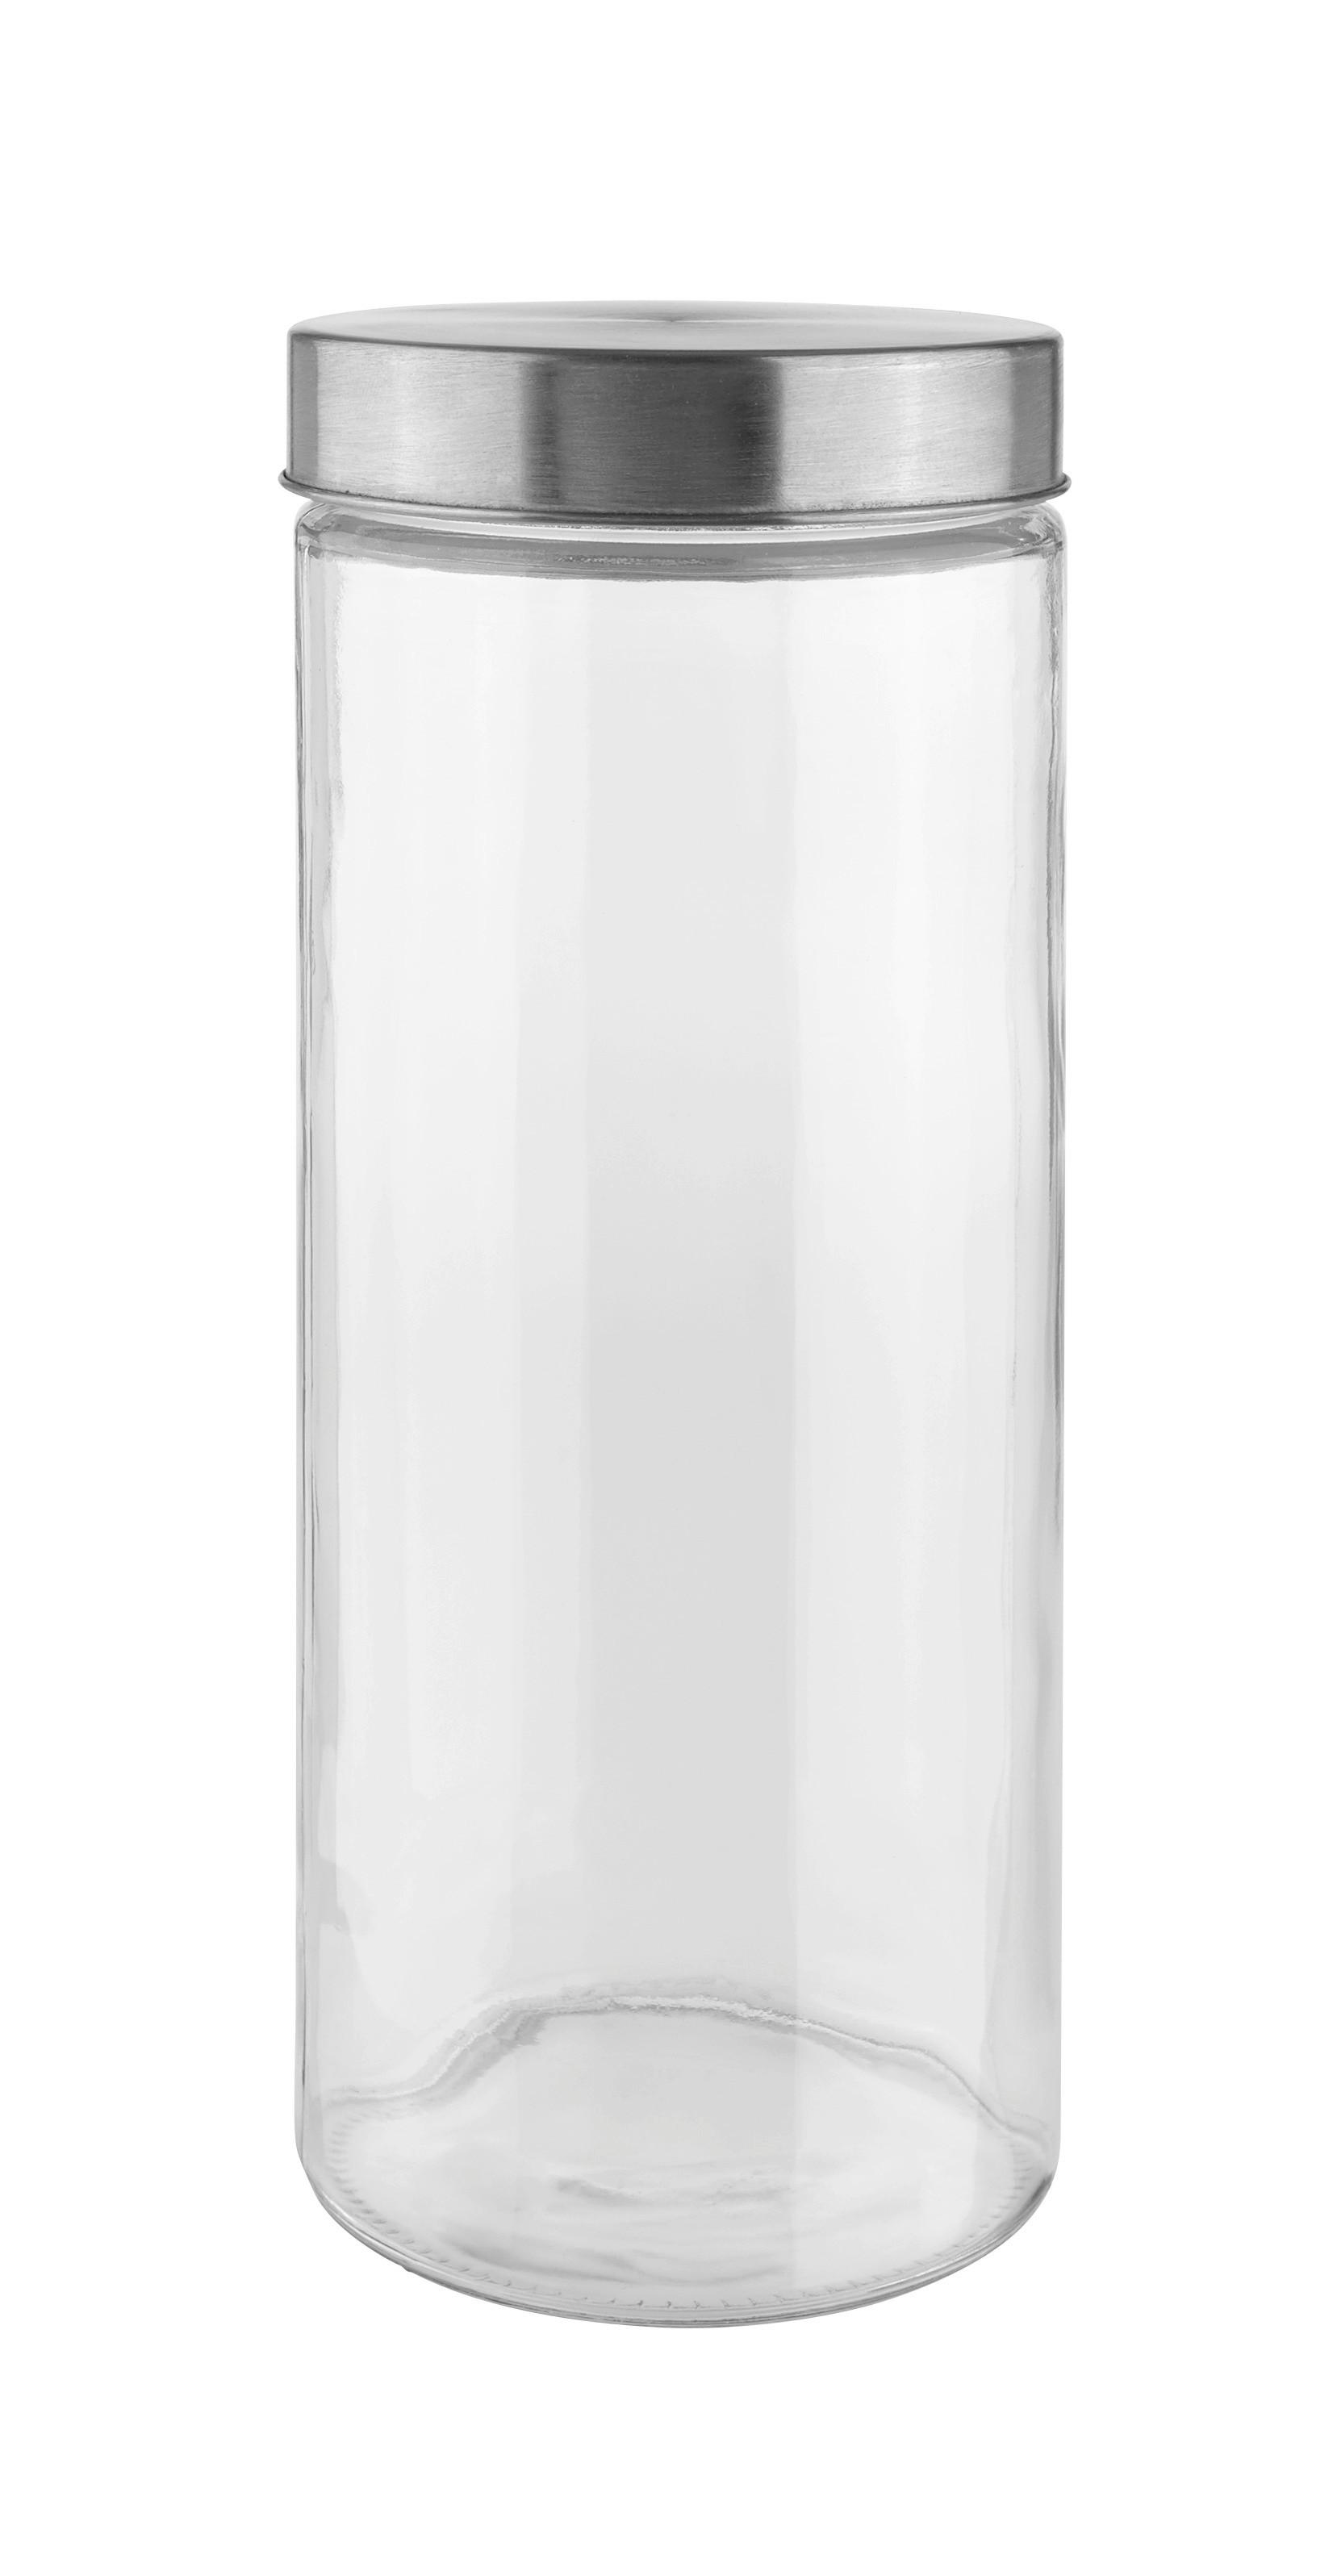 Vorratsdose Magnus aus Glas ca. 1,75l - Klar/Edelstahlfarben, MODERN, Glas/Metall (11,5/27,5cm) - Modern Living